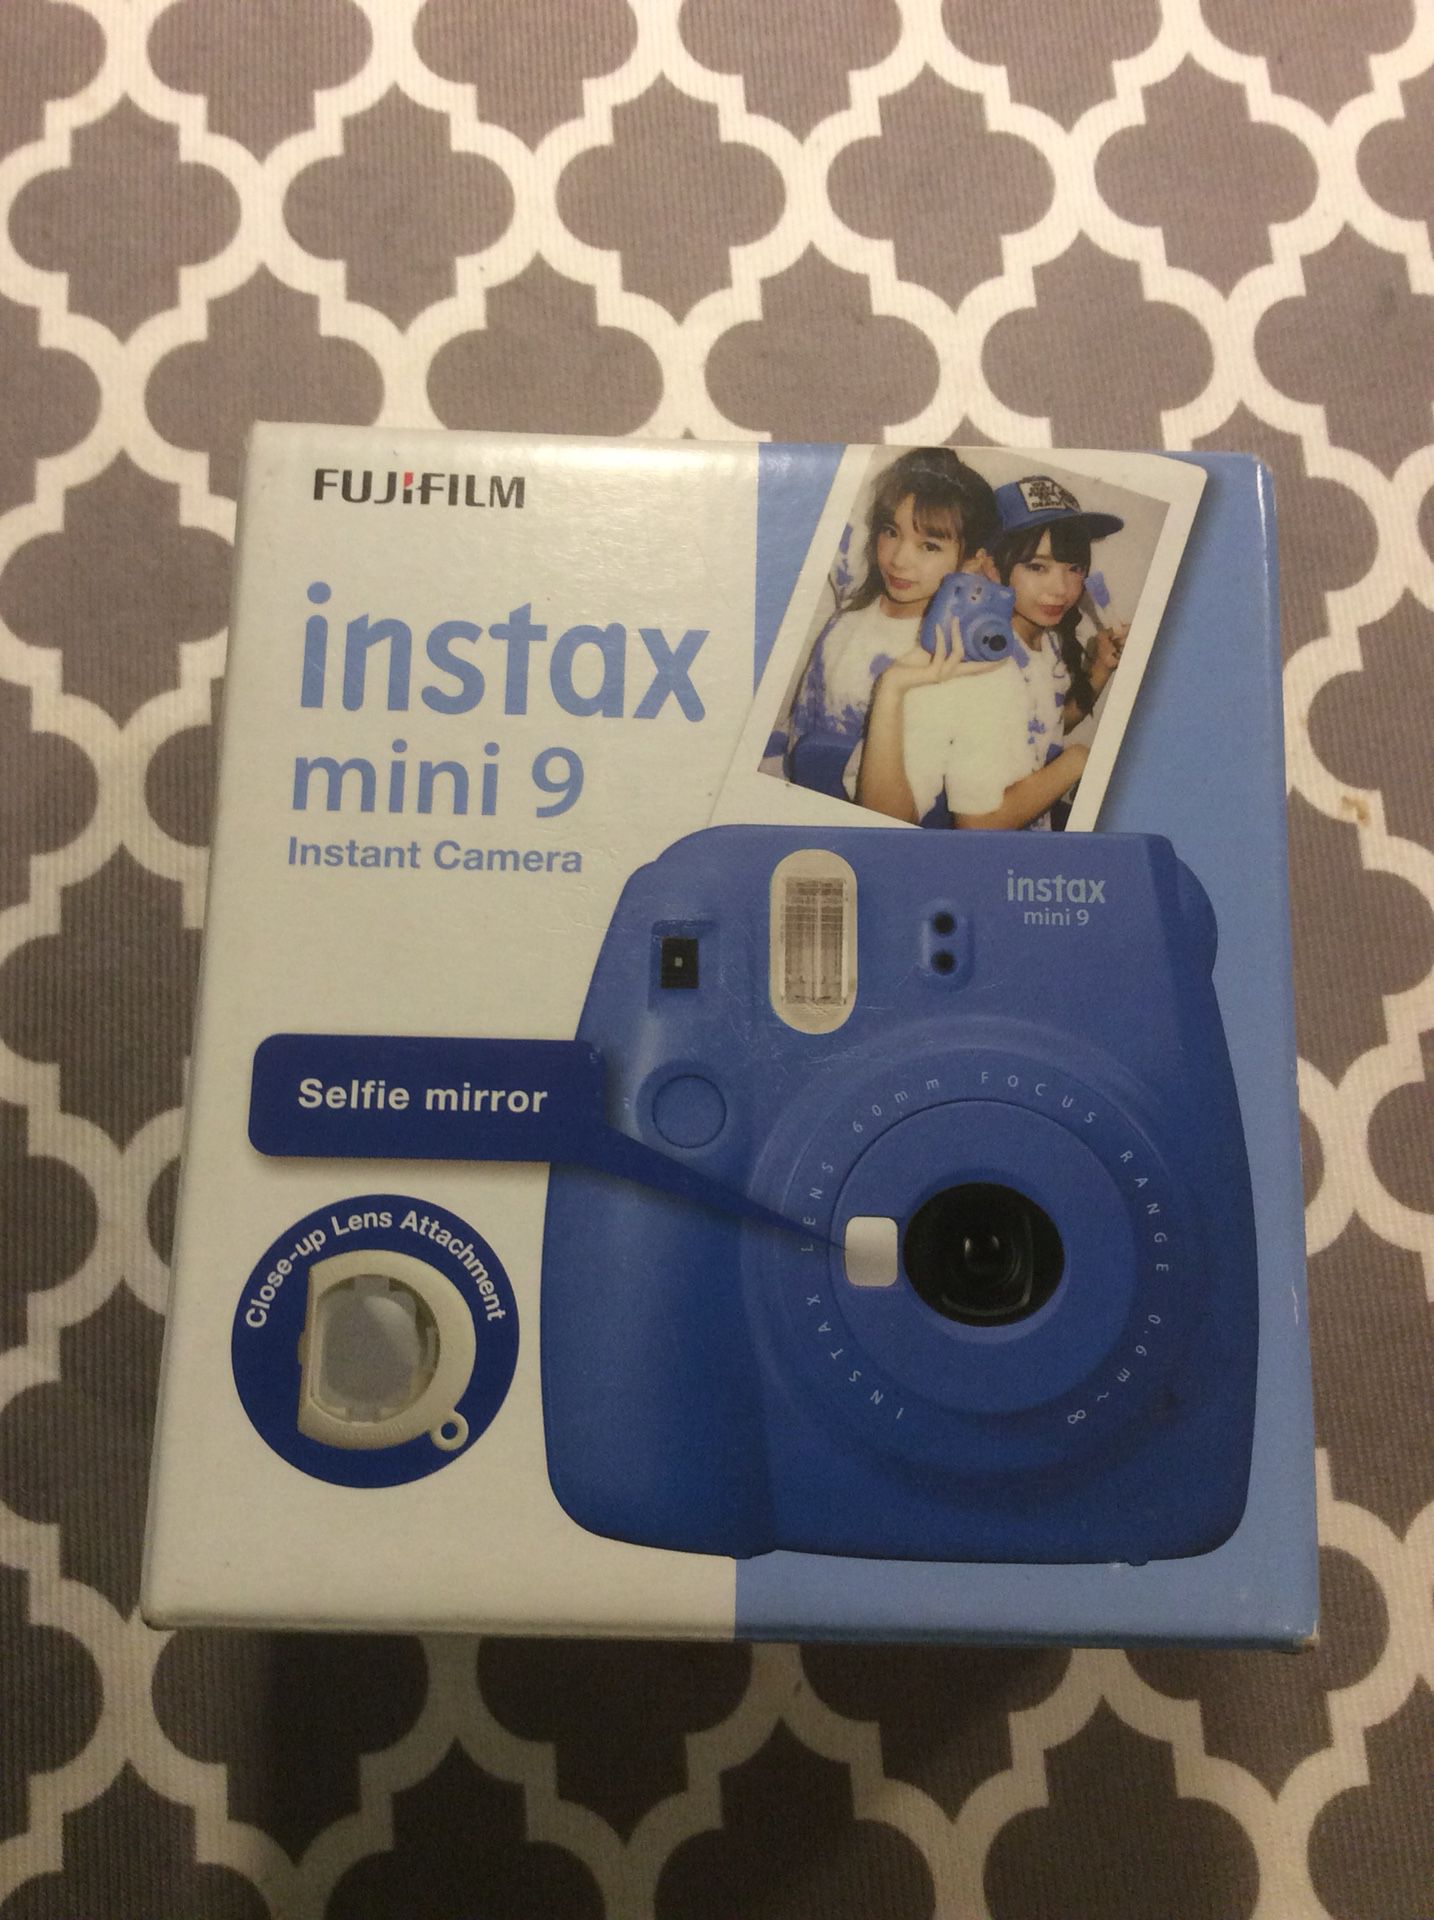 Instax mini 9 FUJIFILM “Polaroid camera”